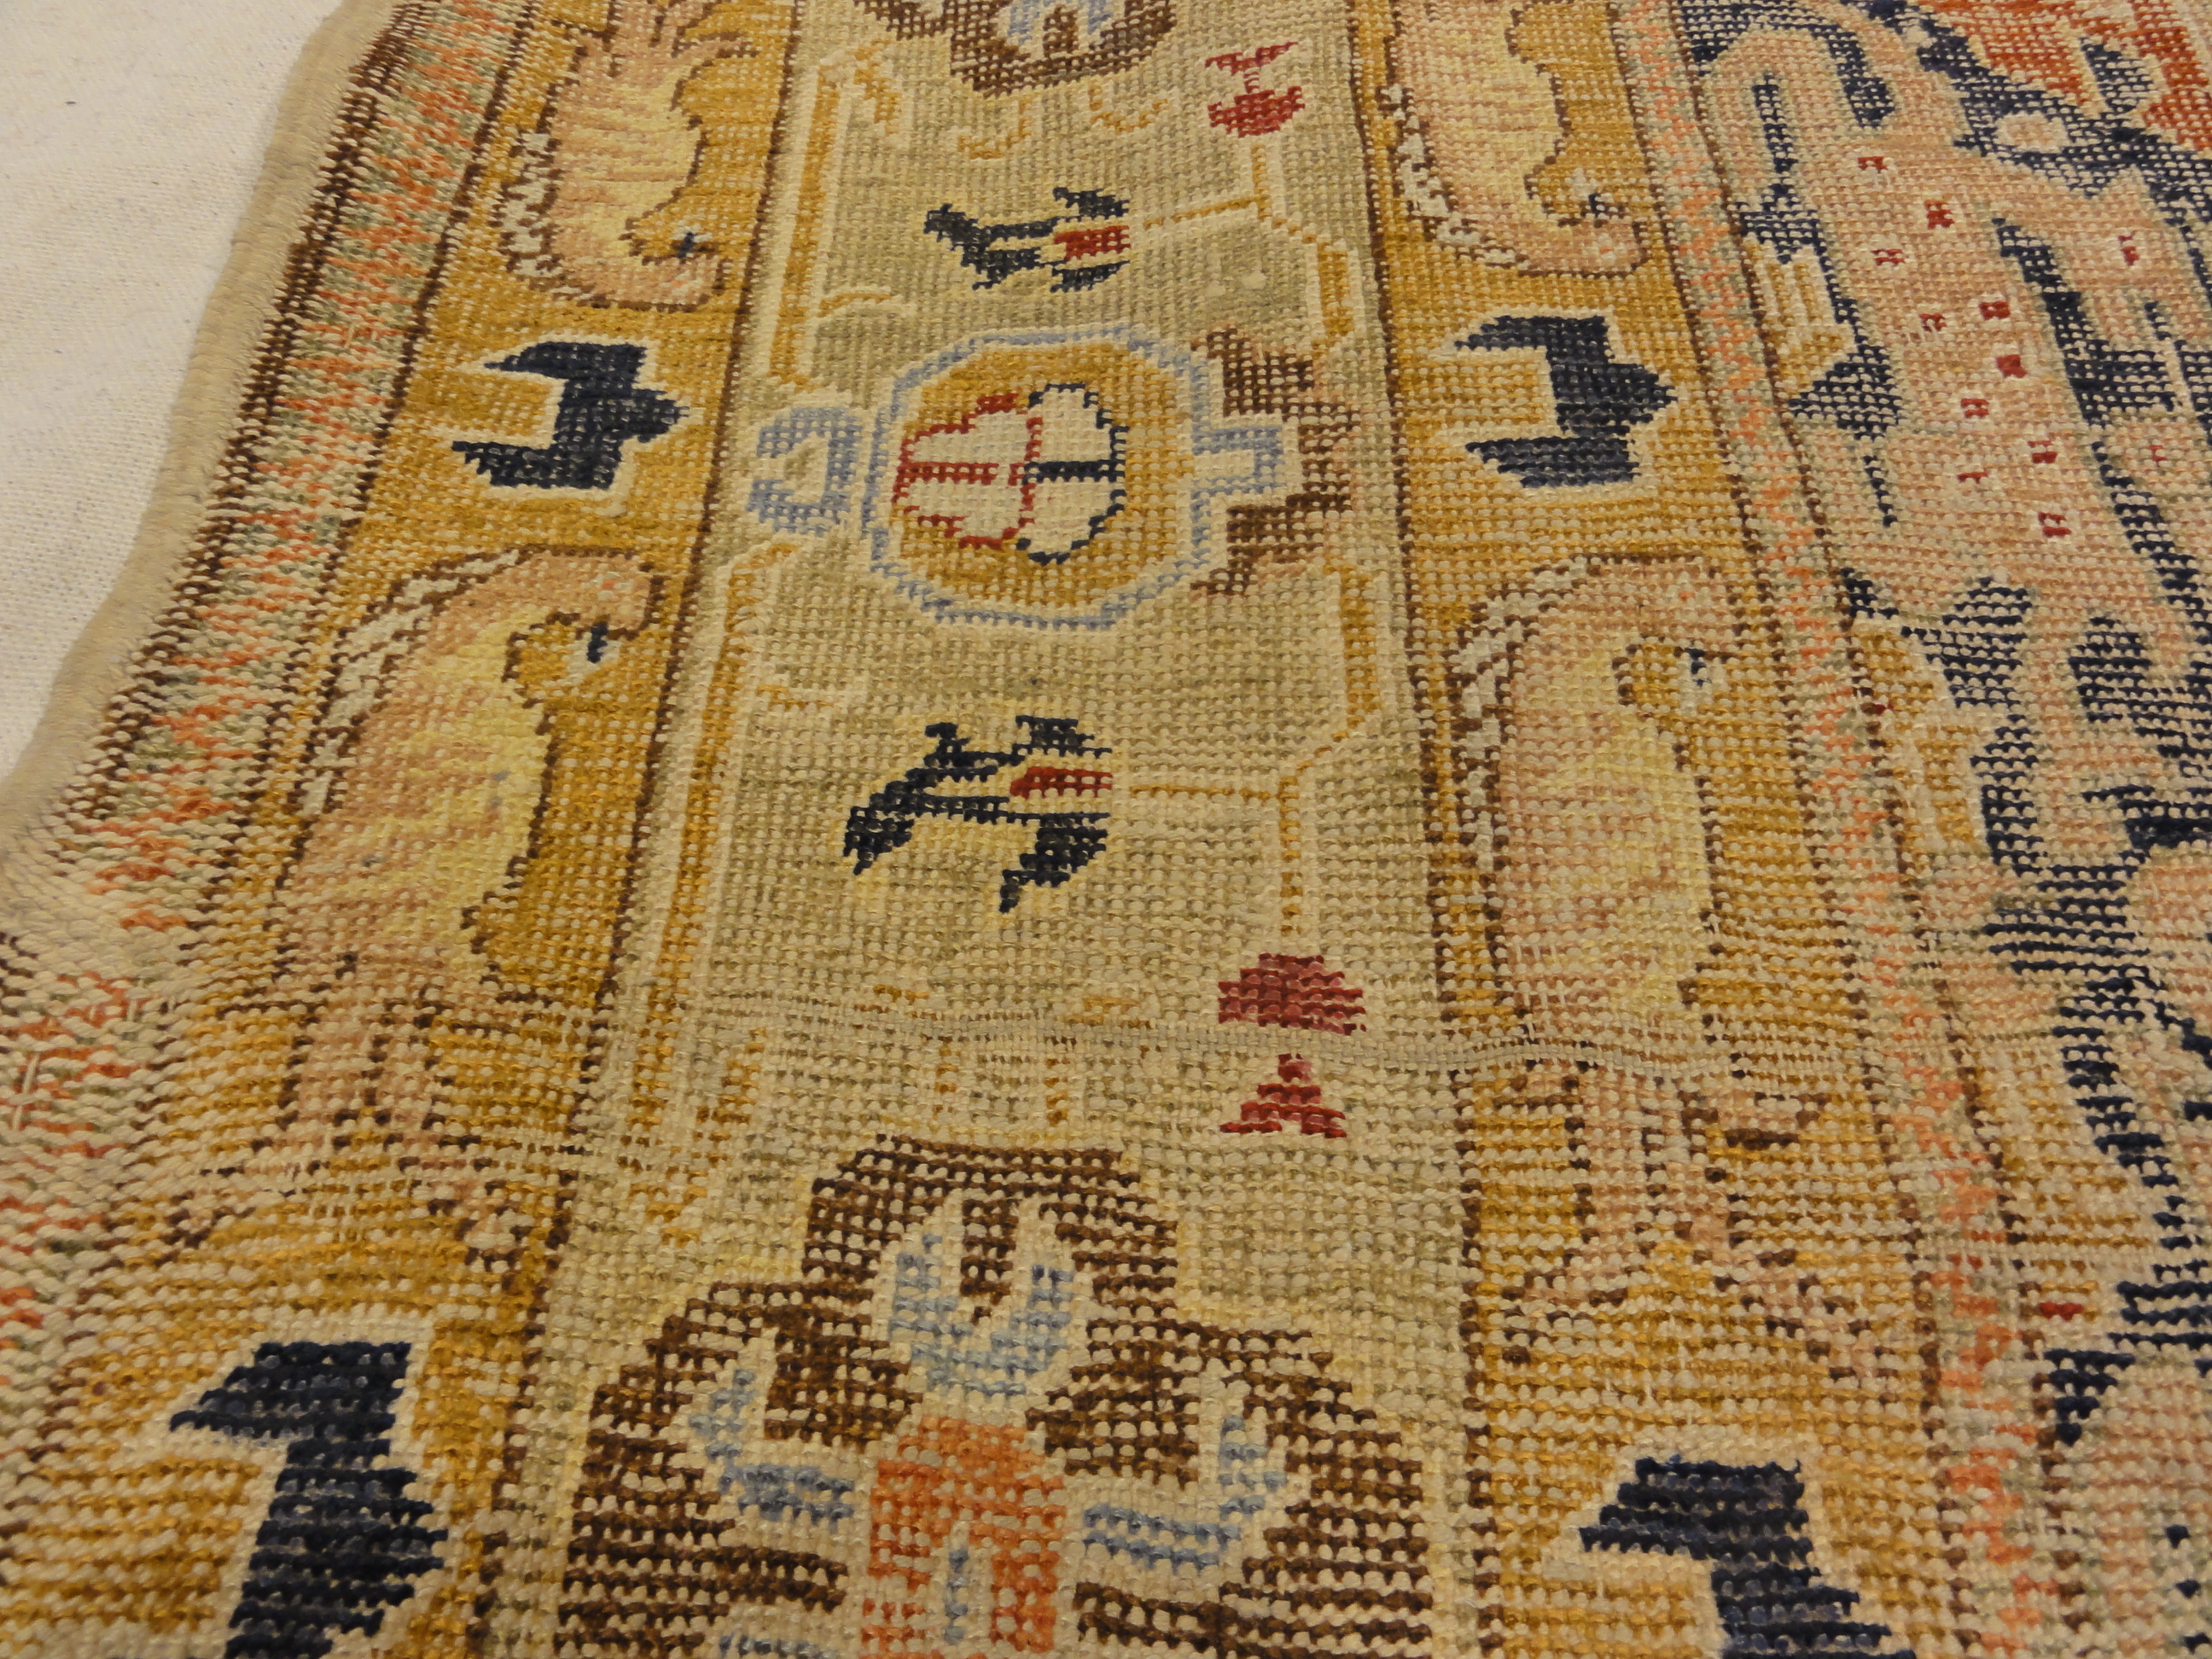 Classical Silk Collectible Caucasian Kayran in Great Condition. A piece of genuine, woven carpet art sold by Santa Barbara Design Center.